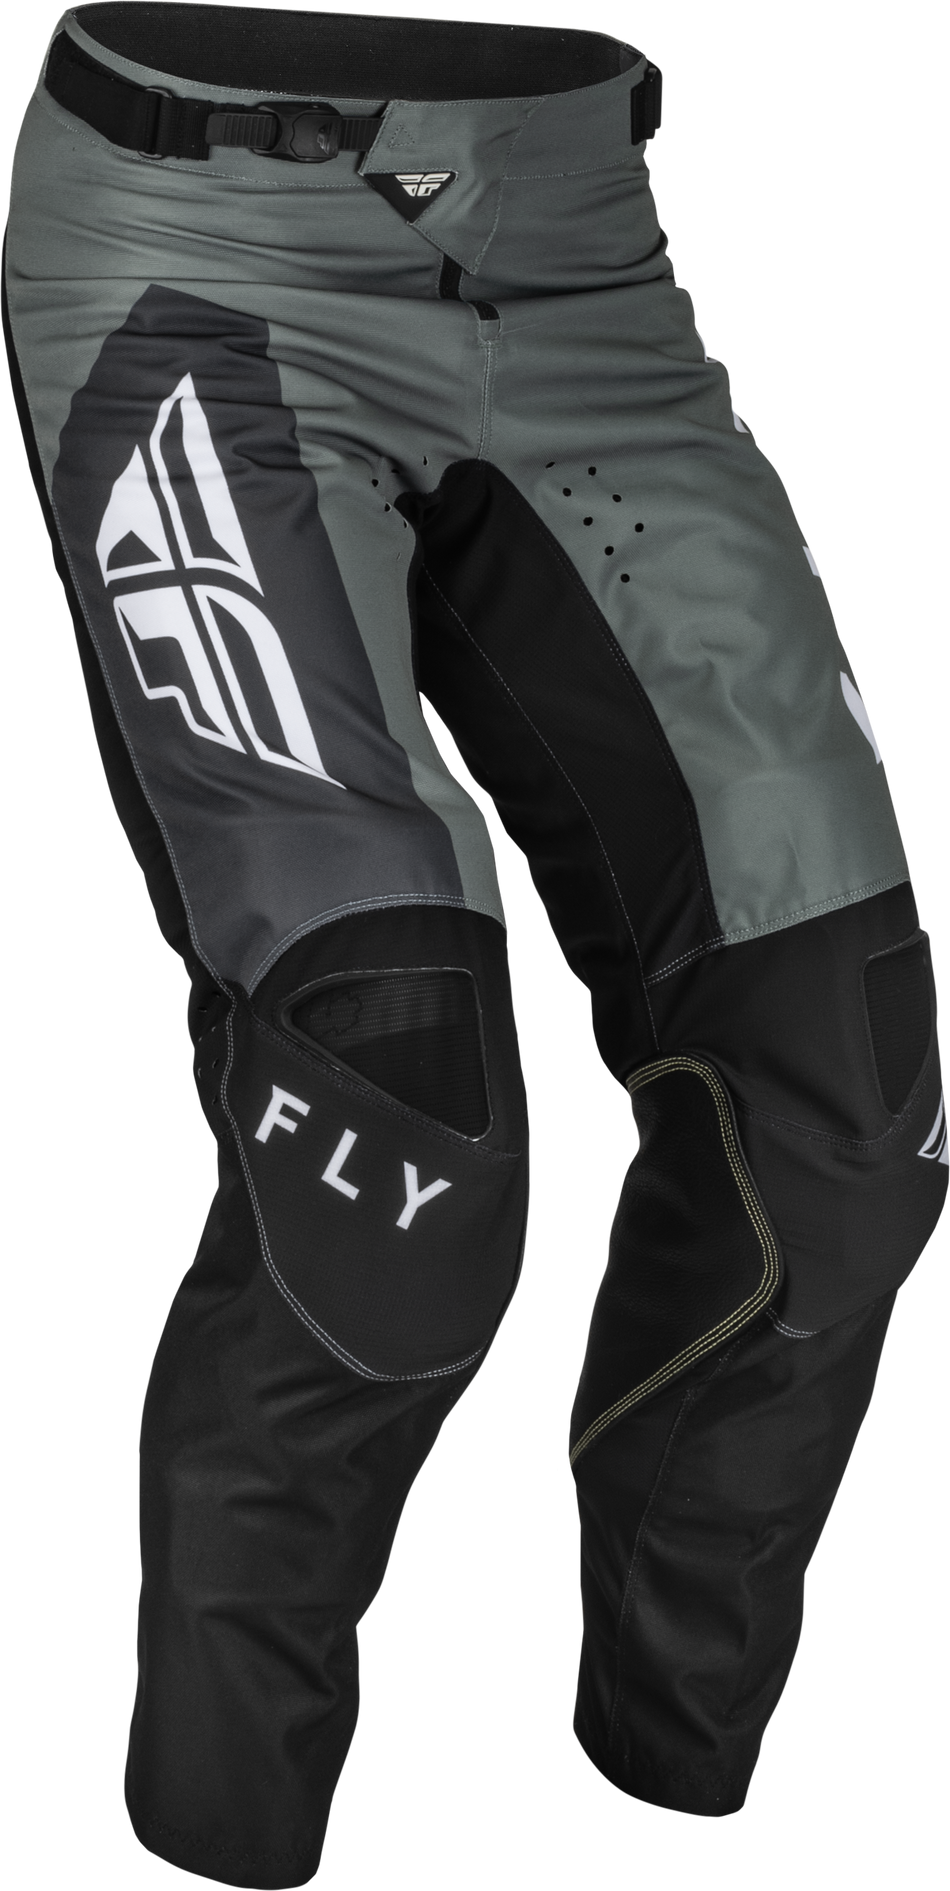 FLY RACING Kinetic Jet Pants Grey/Dark Grey/Black Sz 36 376-53336